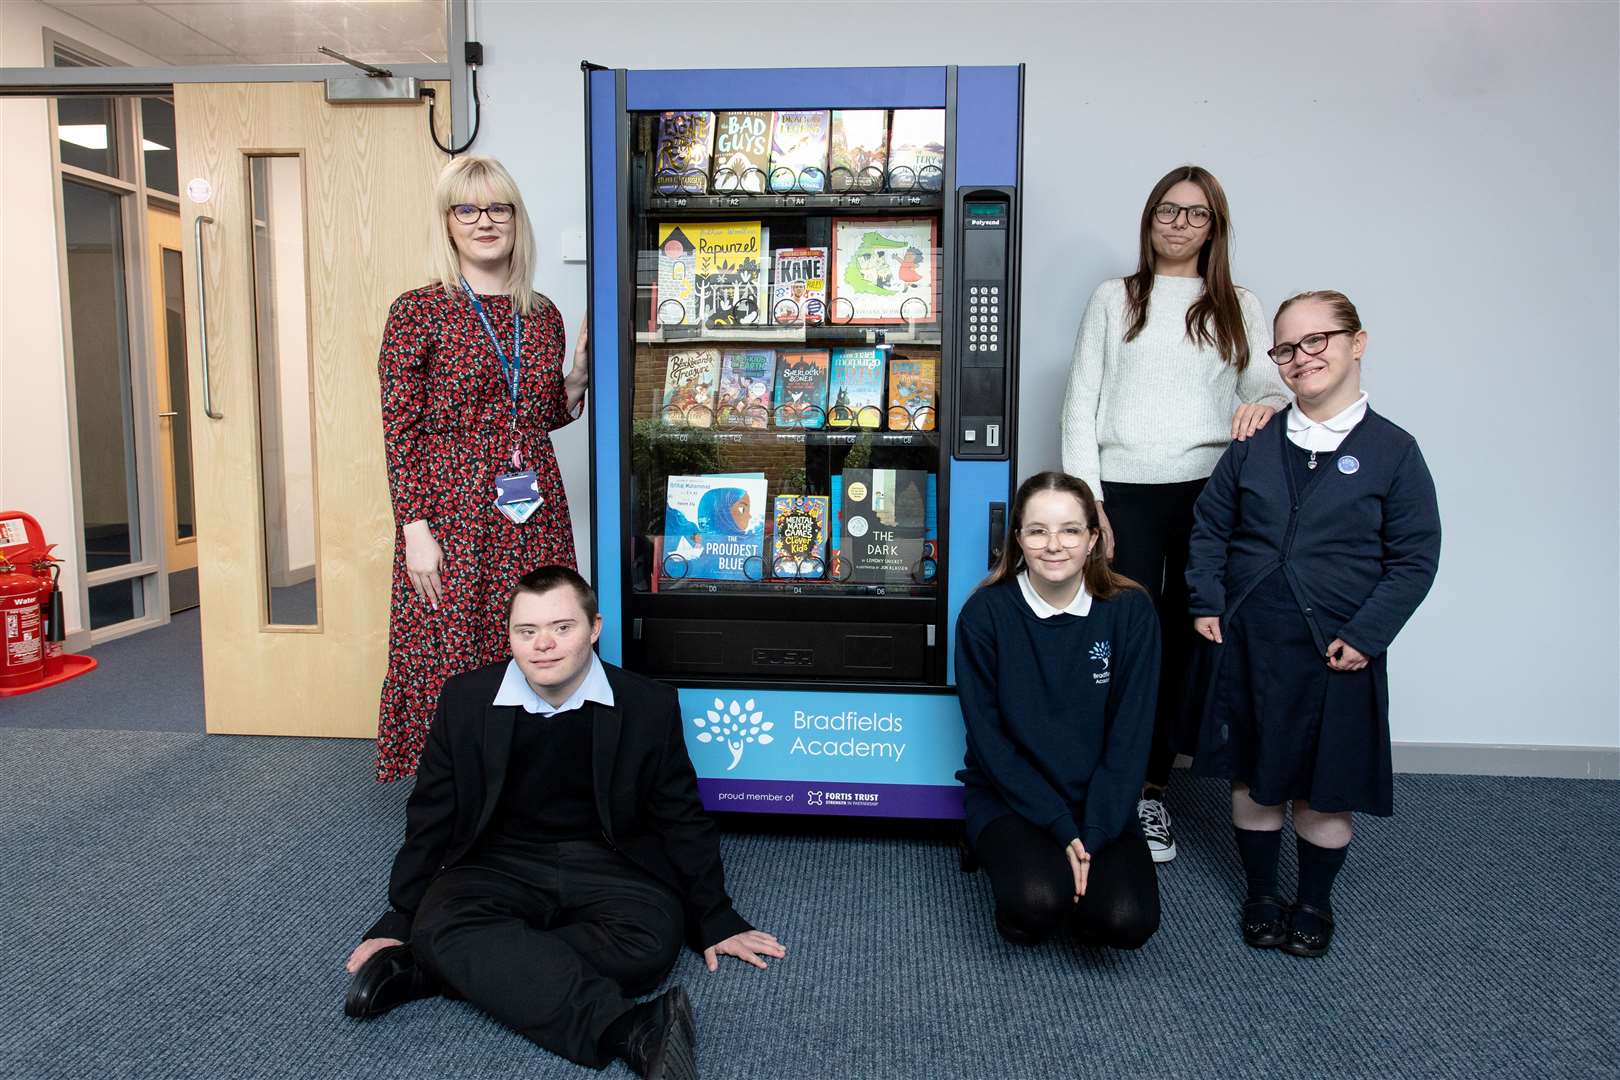 Bradfields Academy has introduced a book vending machine